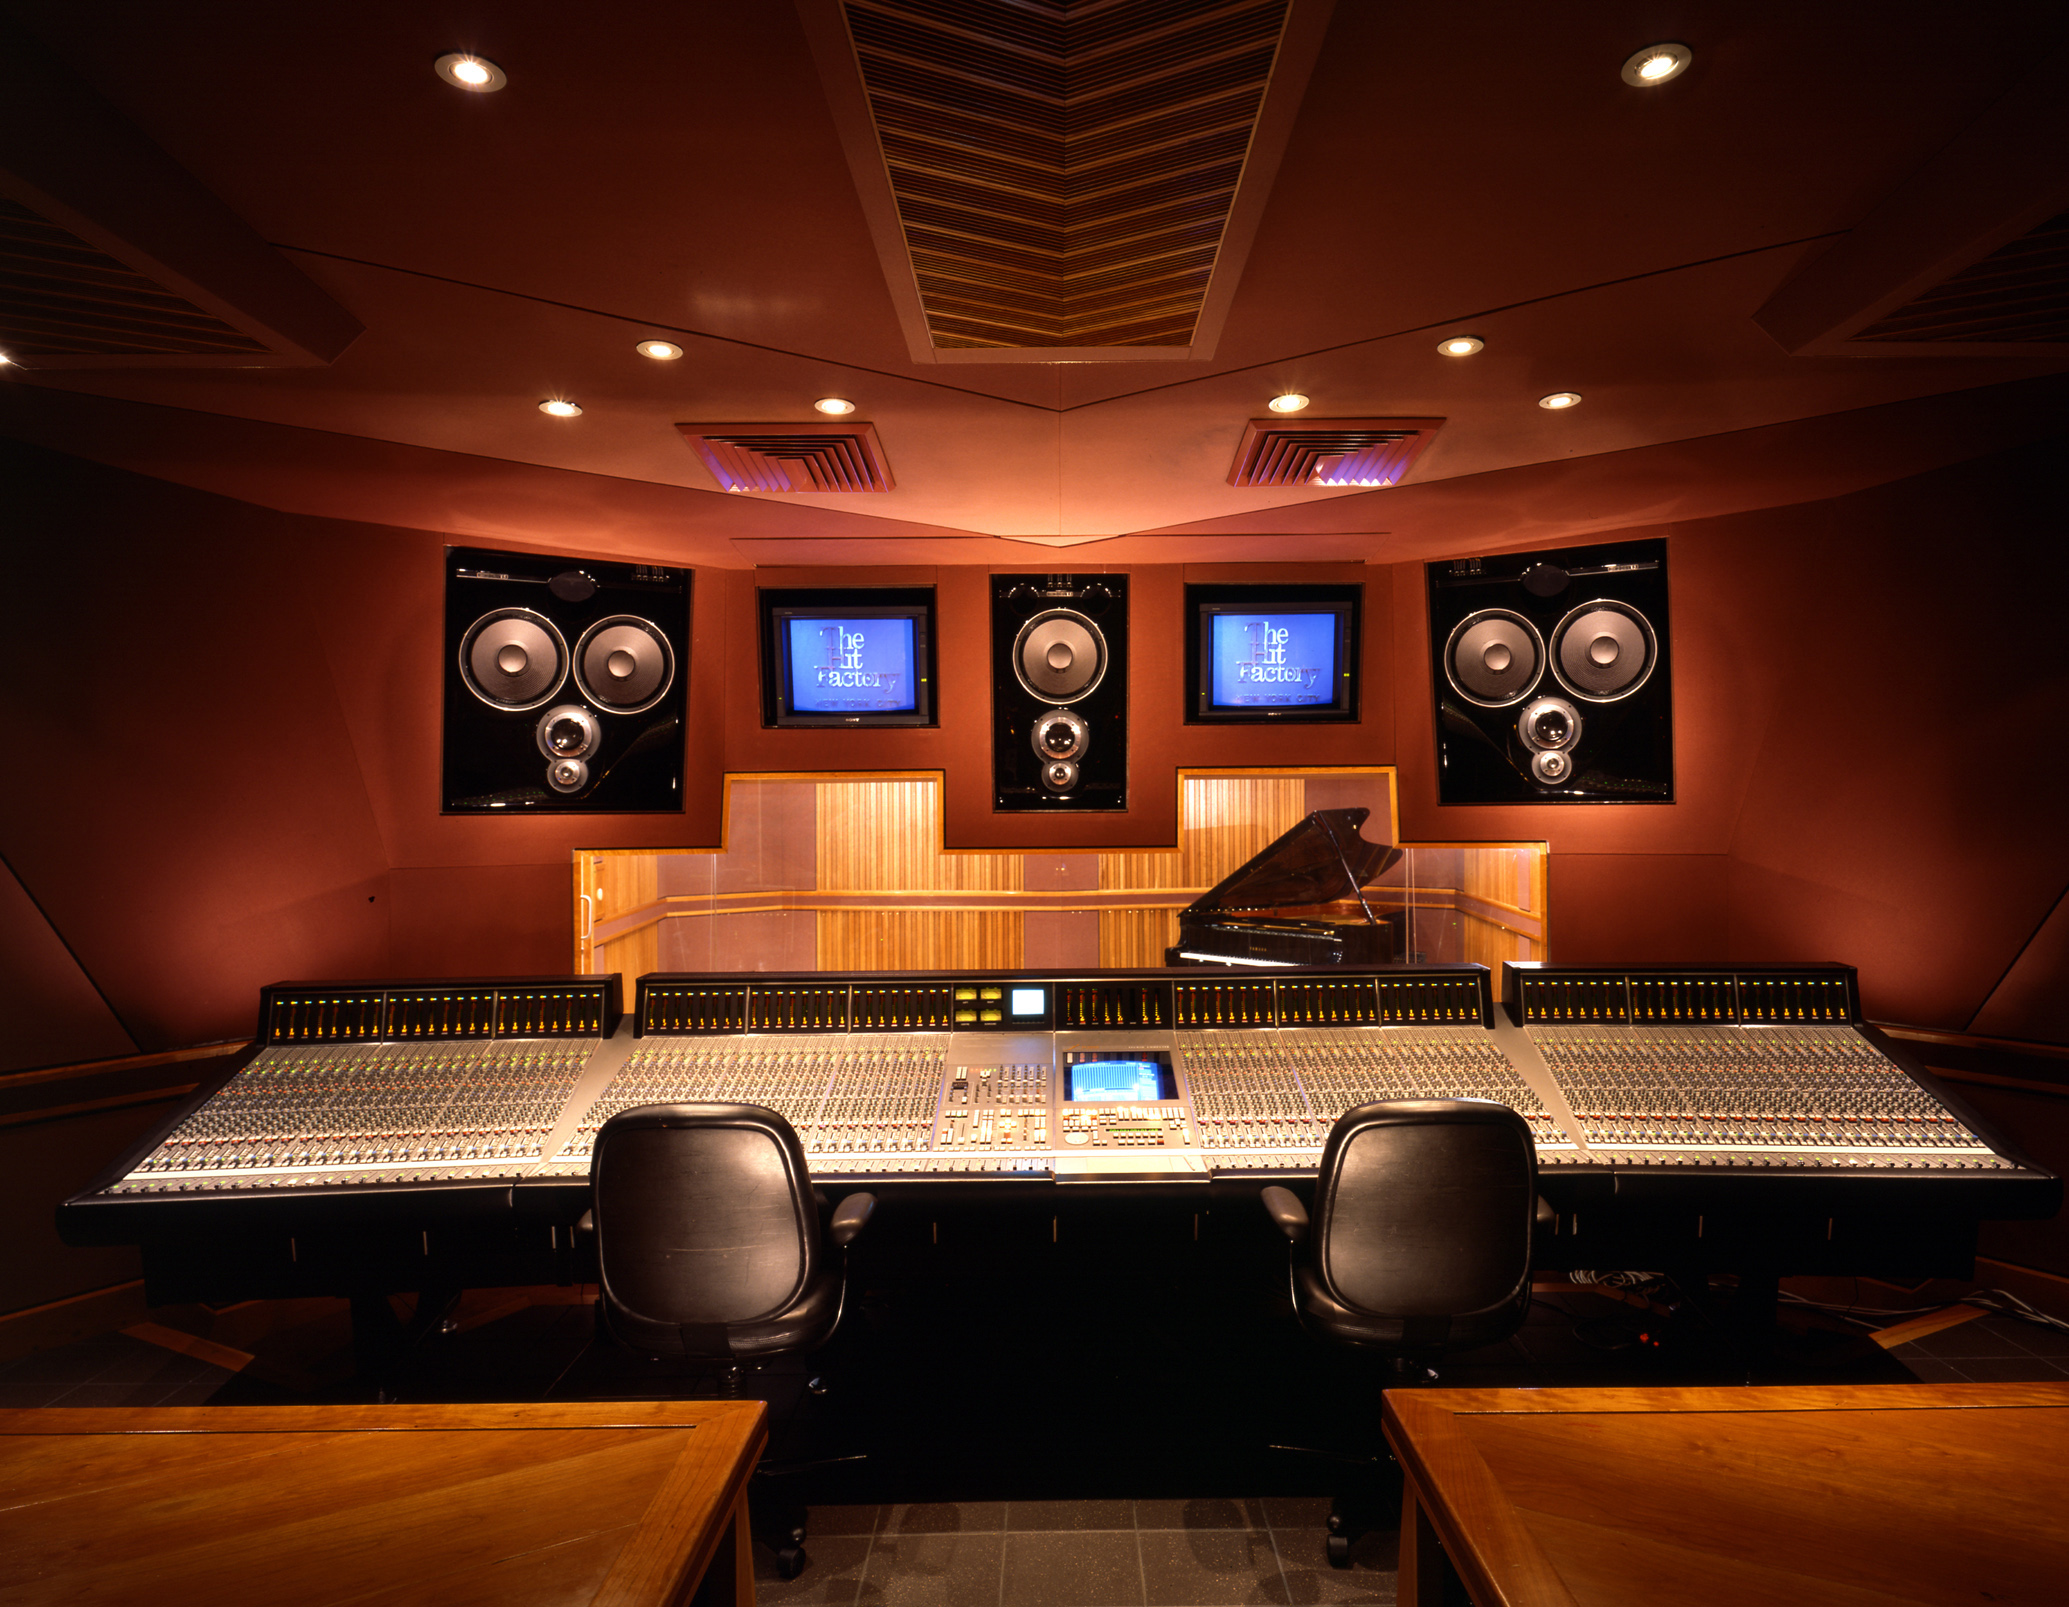 Home Studio Recording Design | Joy Studio Design Gallery - Best Design